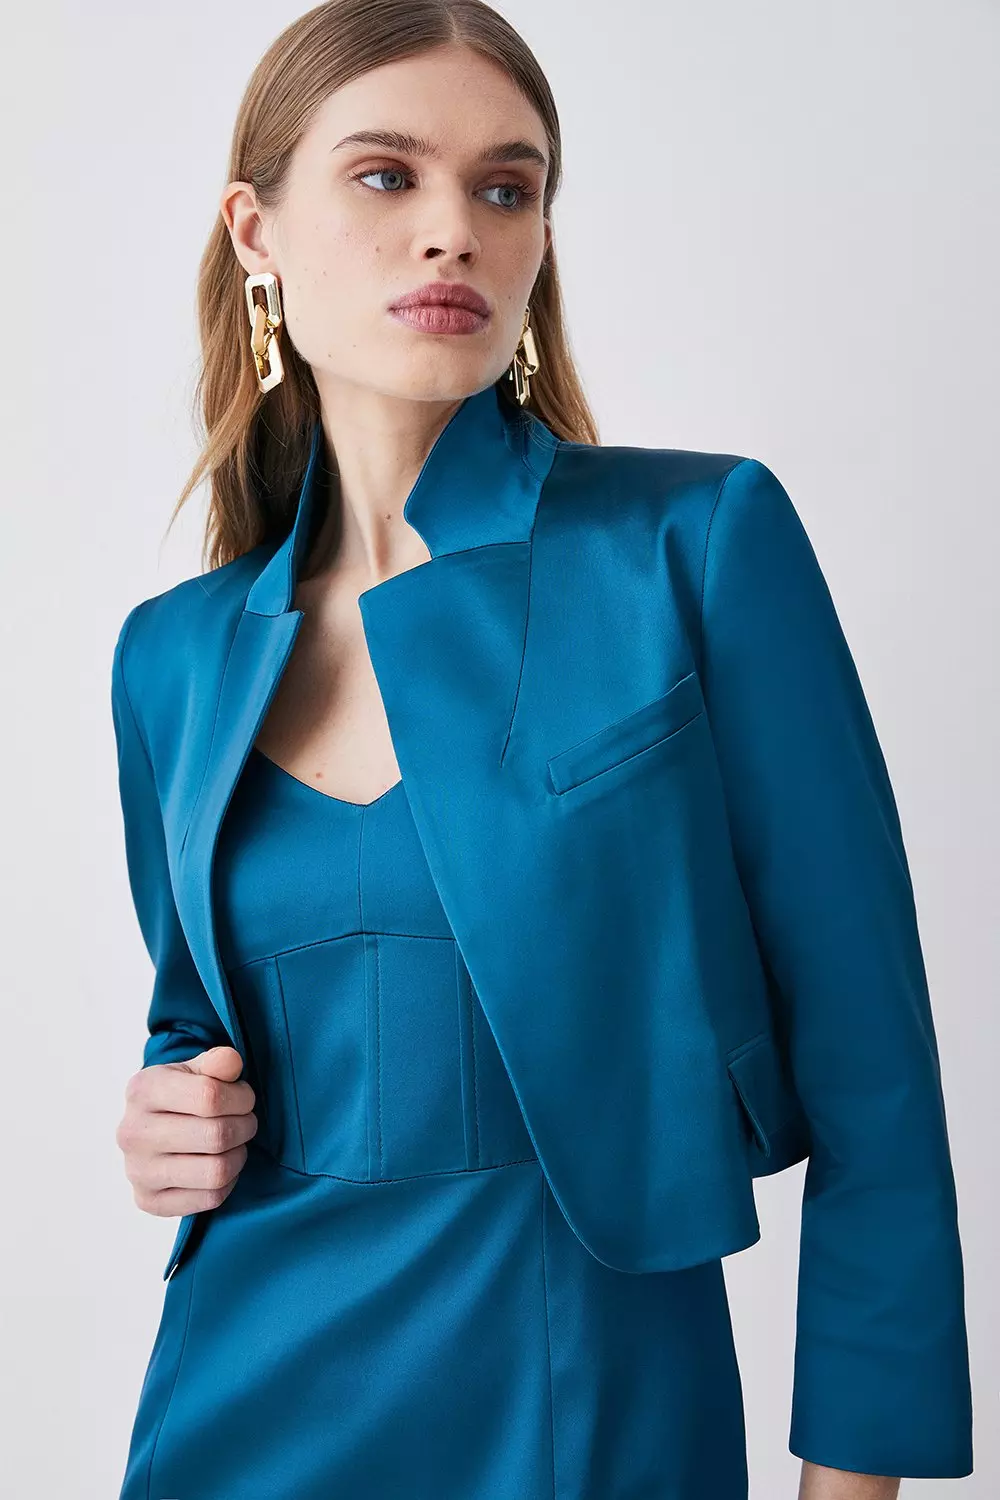 Italian Structured Satin Notch Neck Tailored Jacket | Karen Millen